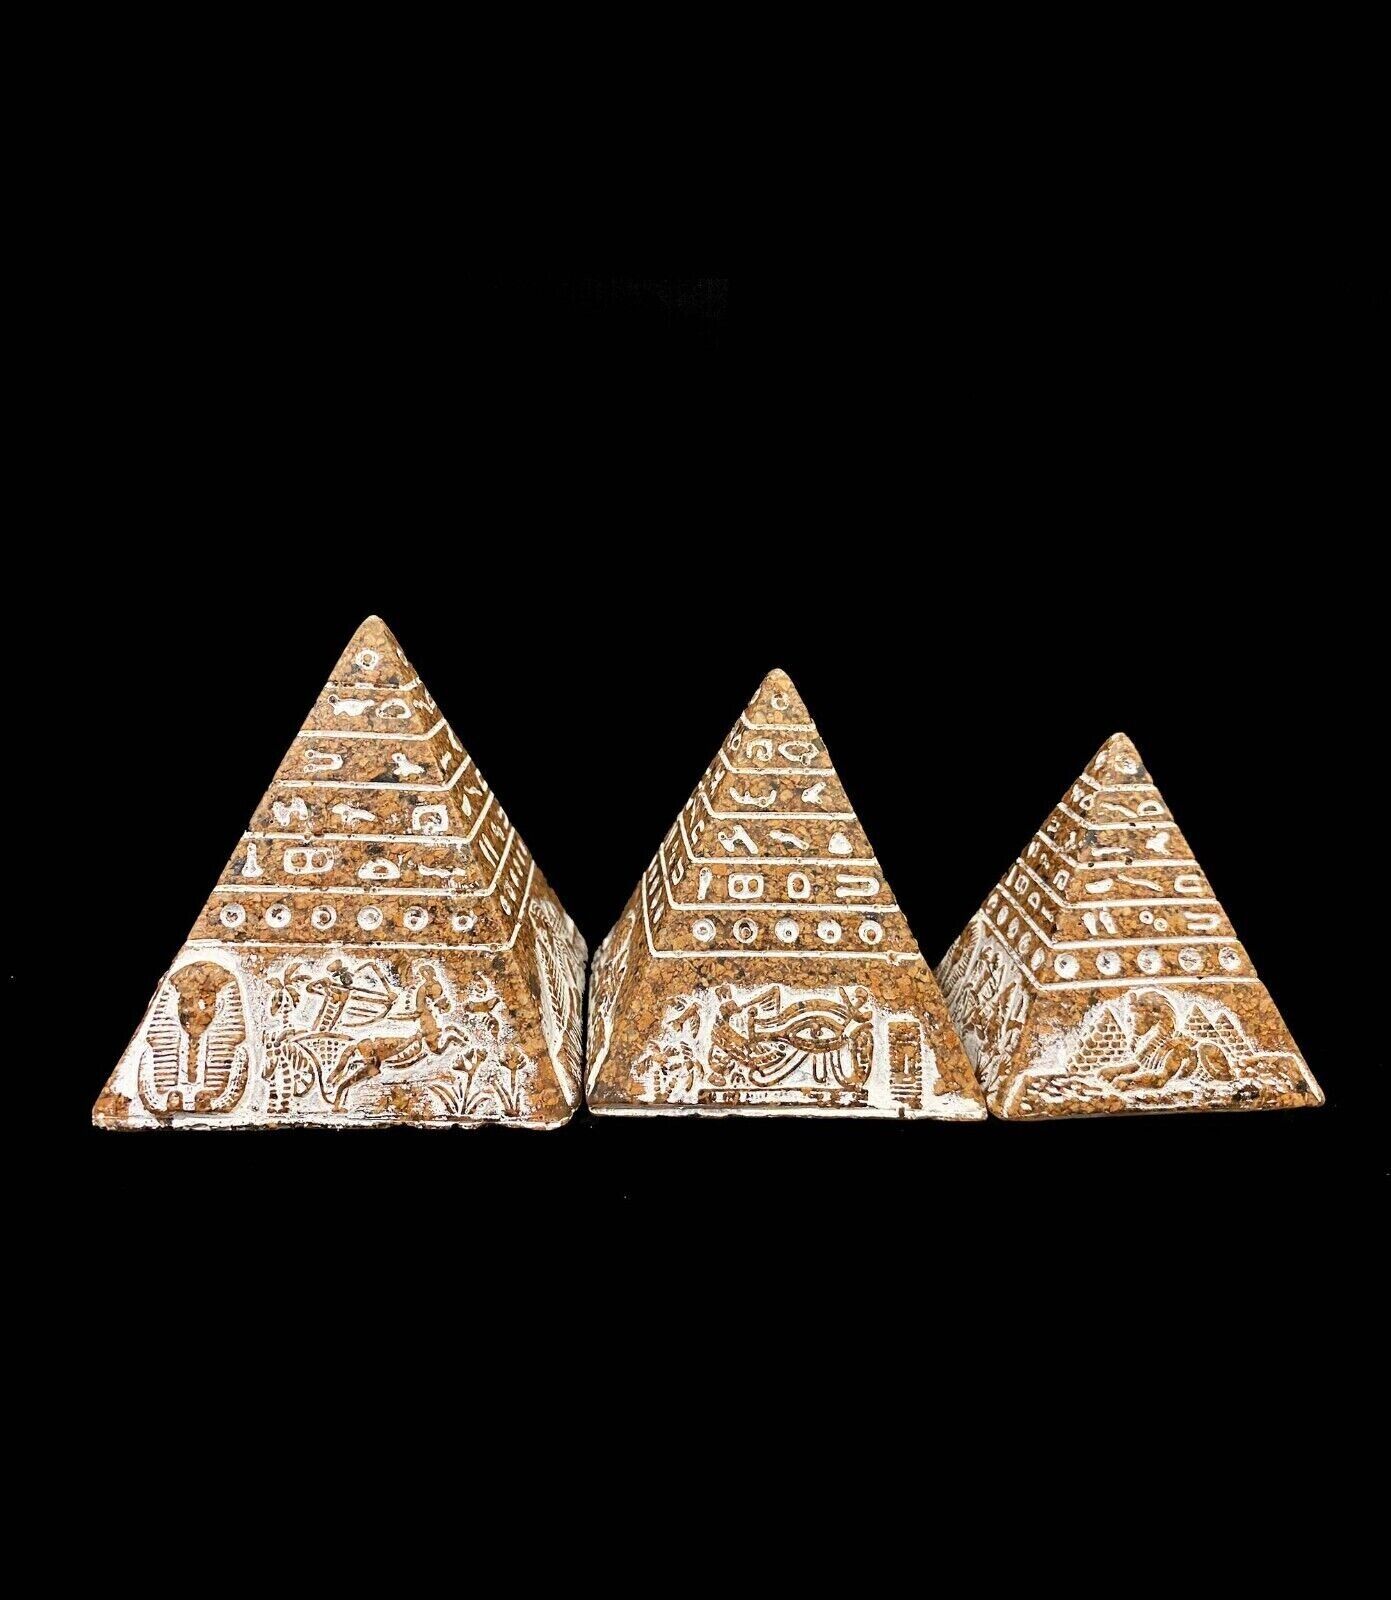 Three Egyptian pyramids - Three Pyramids of Khafre, Khufu and Menkaure